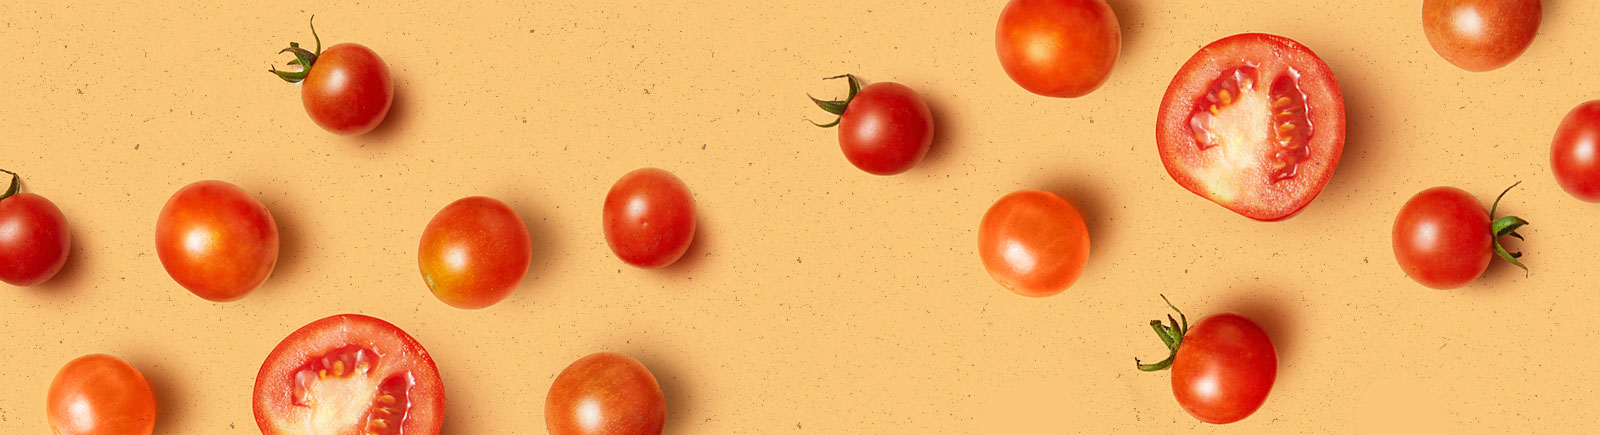 header image of grape tomatoes